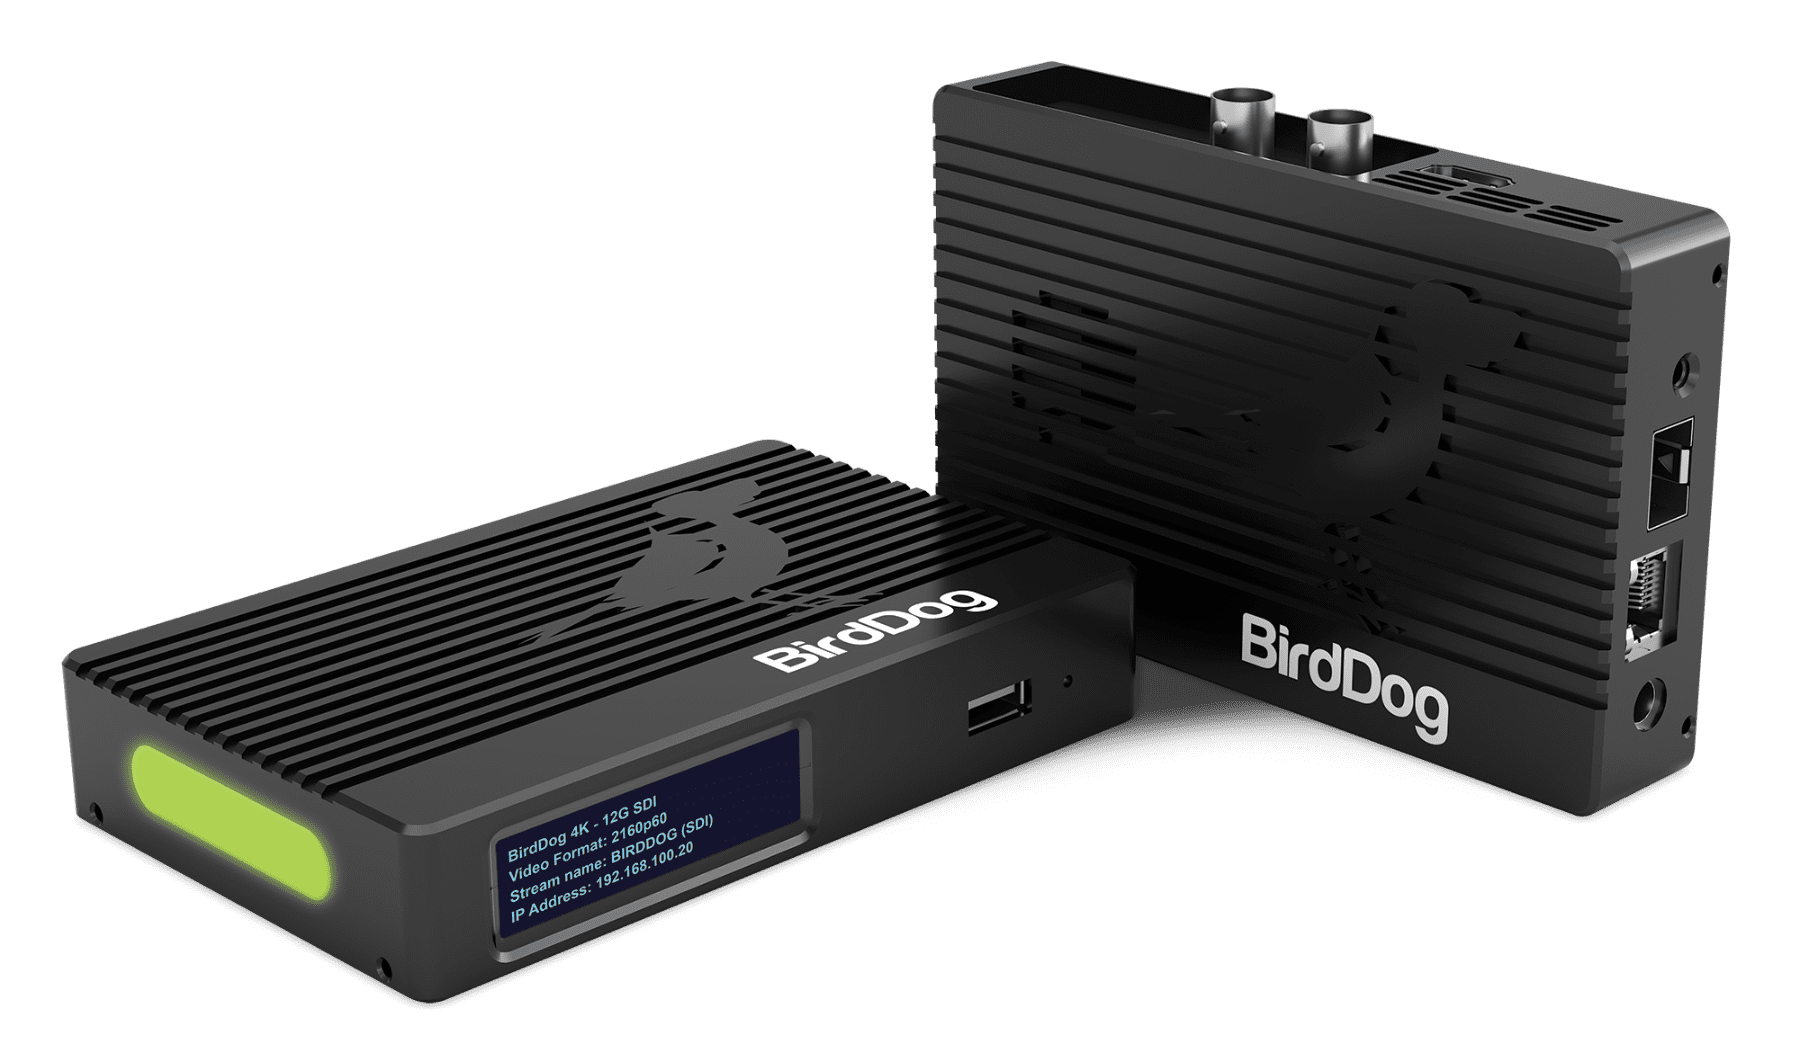 BirdDog 4K SDI NDI Encoder/Decoder